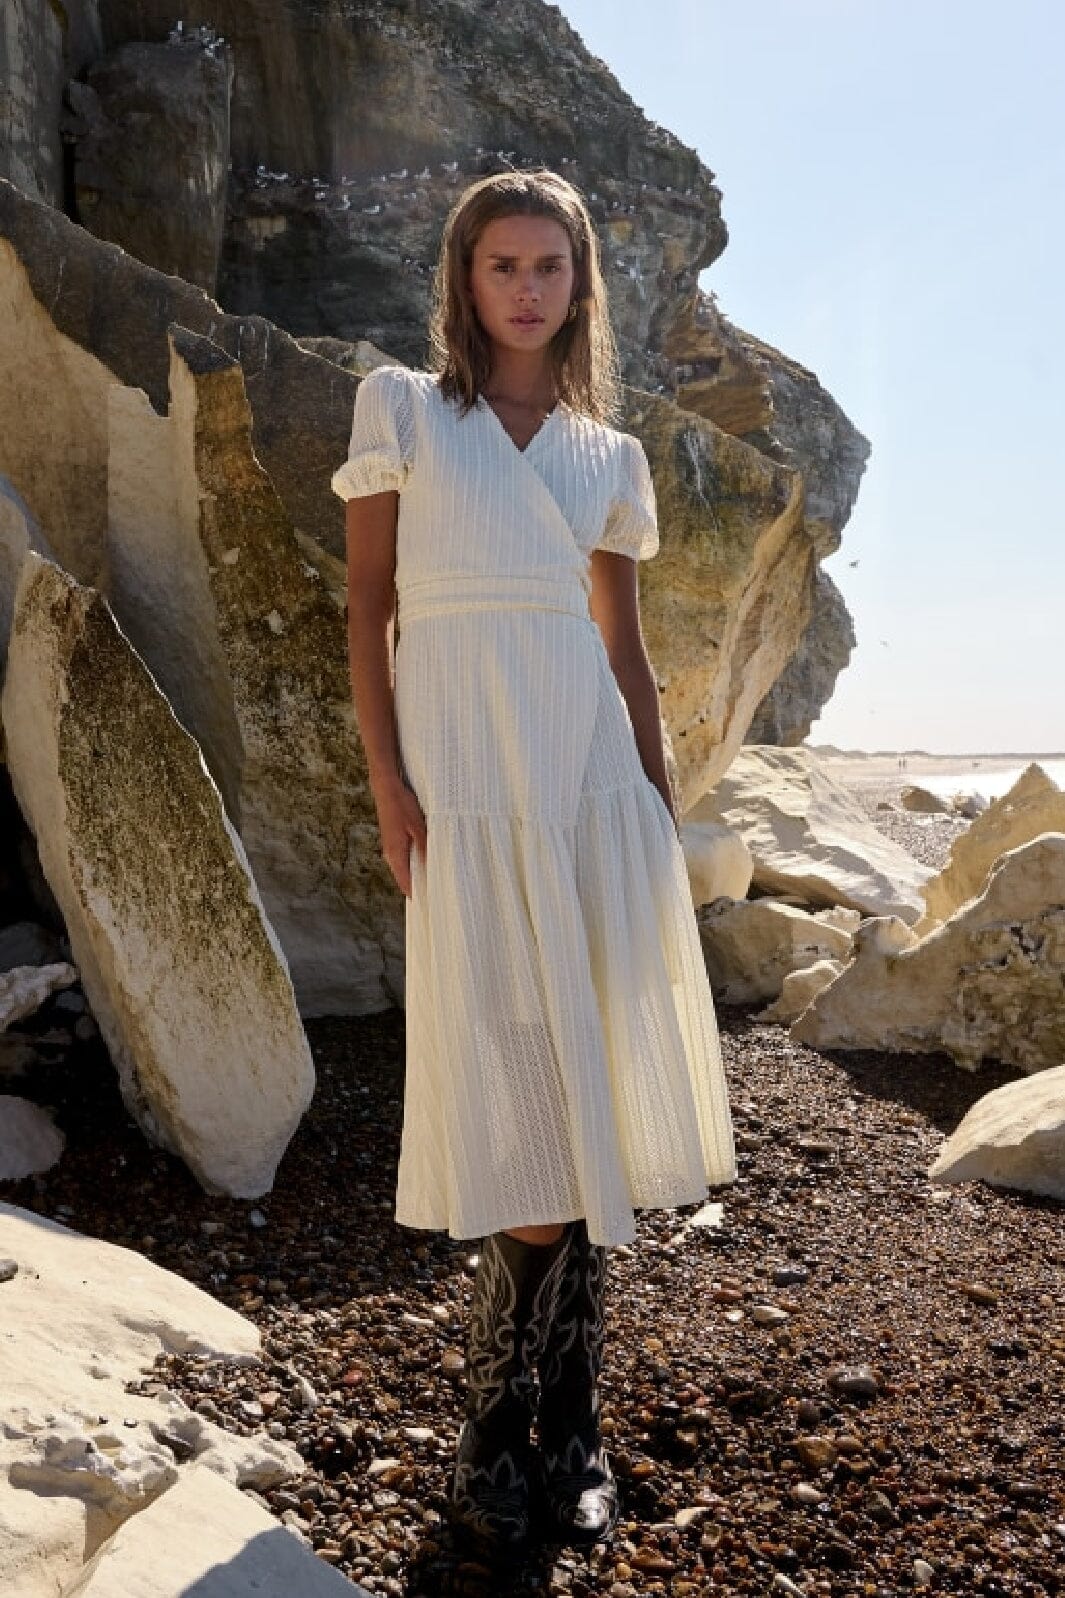 Noella - Rio Wrap Dress - Cream kjoler 